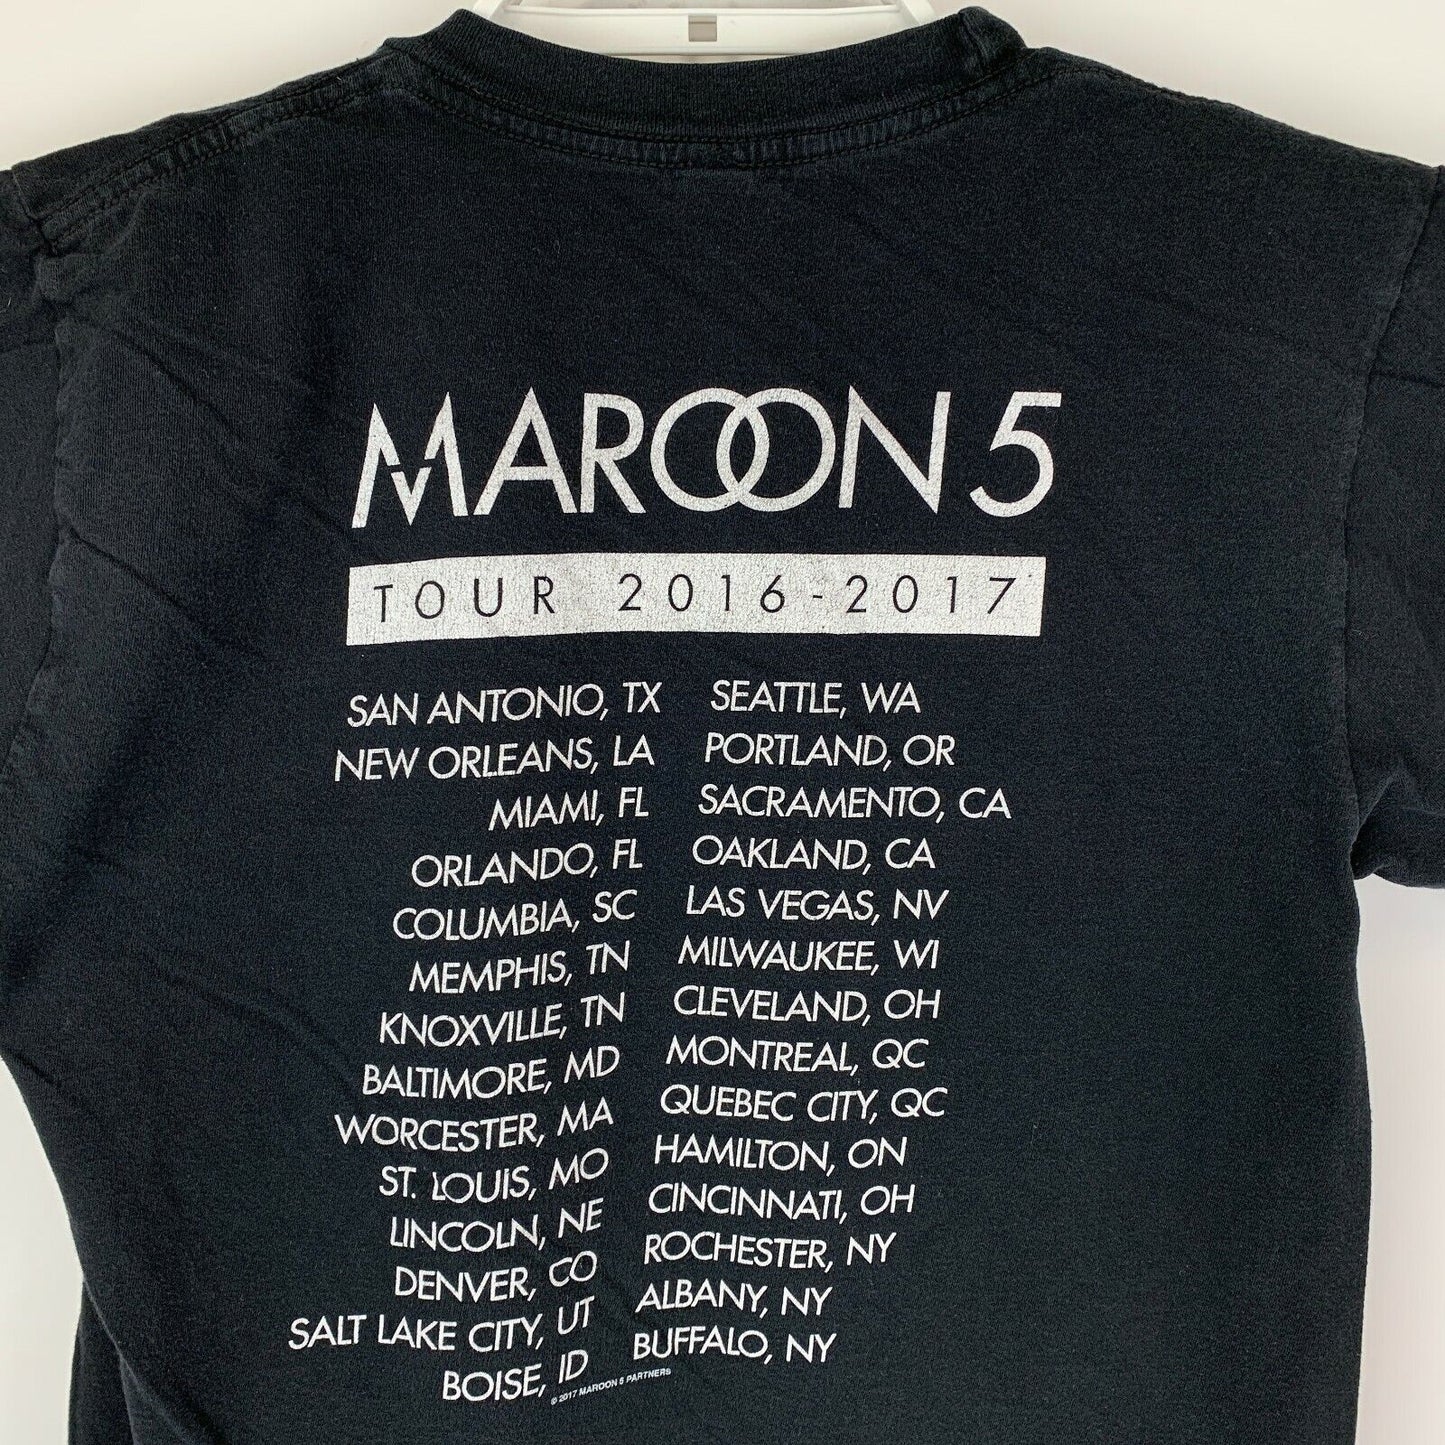 2016-2017 Maroon 5 Tour Camiseta Pop Rock Band Concierto Camiseta gráfica negra Pequeña